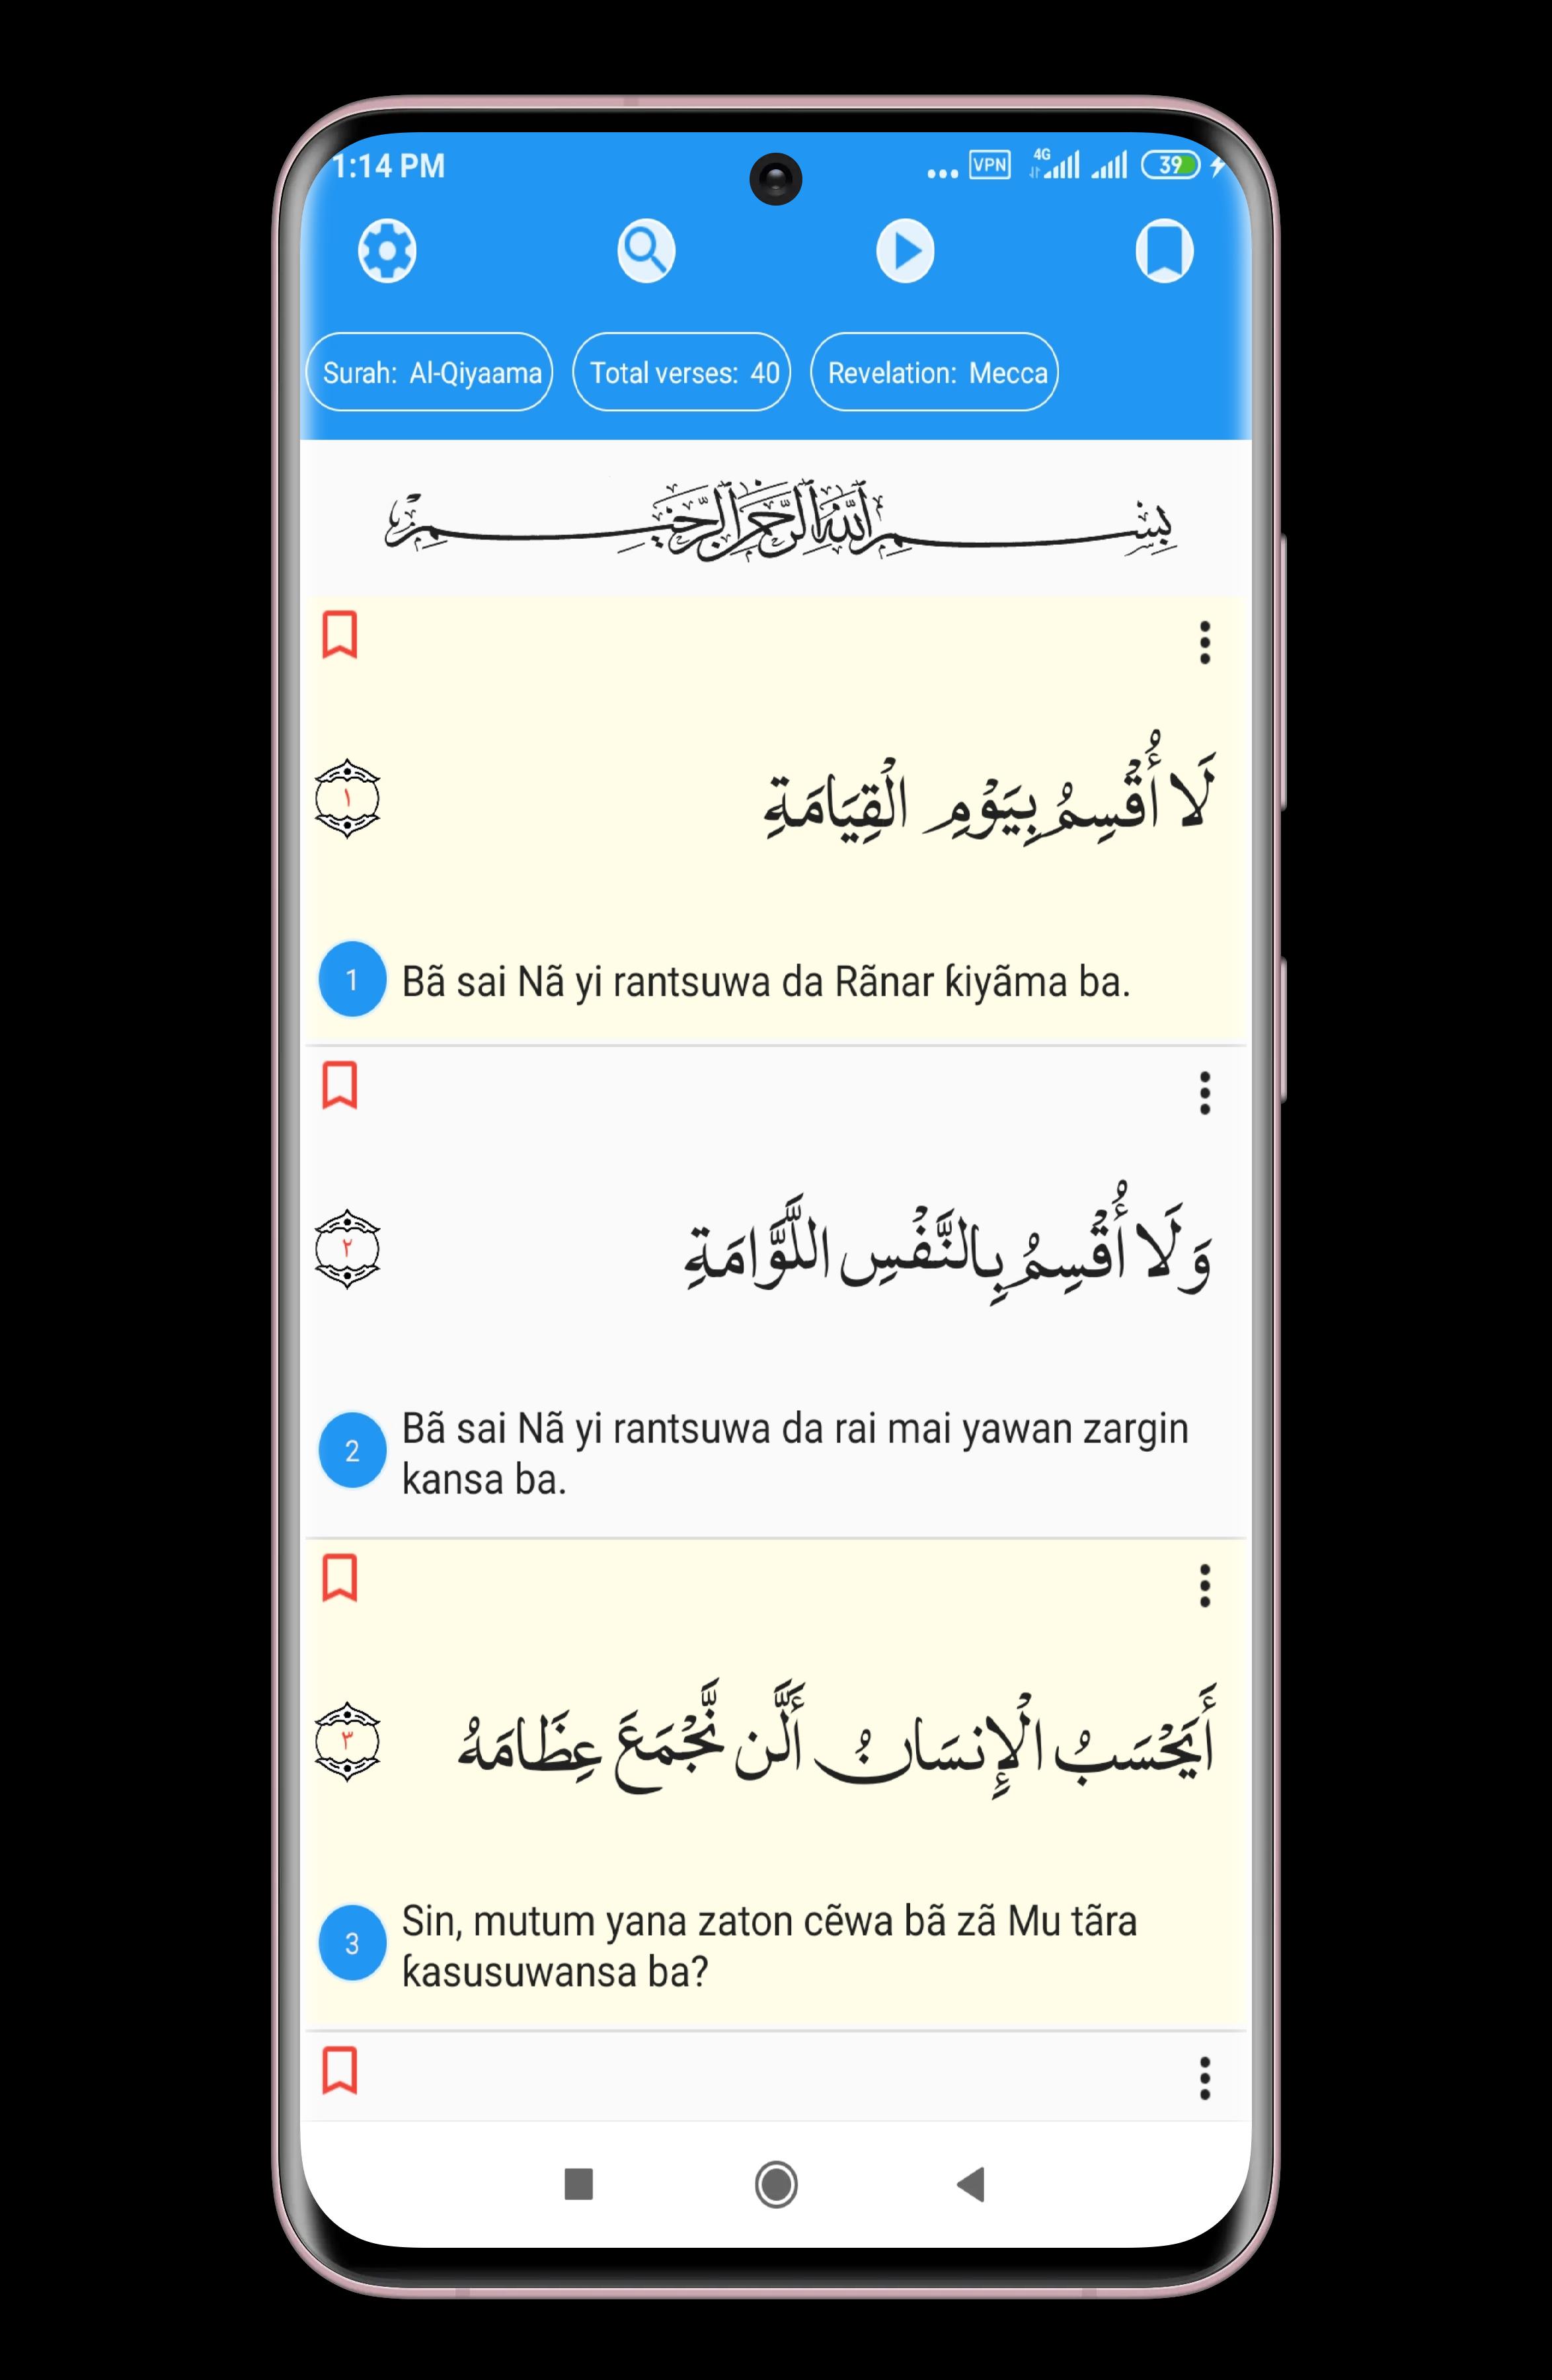 Hausa Qur'an - Qur'an with Hausa Translation 1.1 Screenshot 4